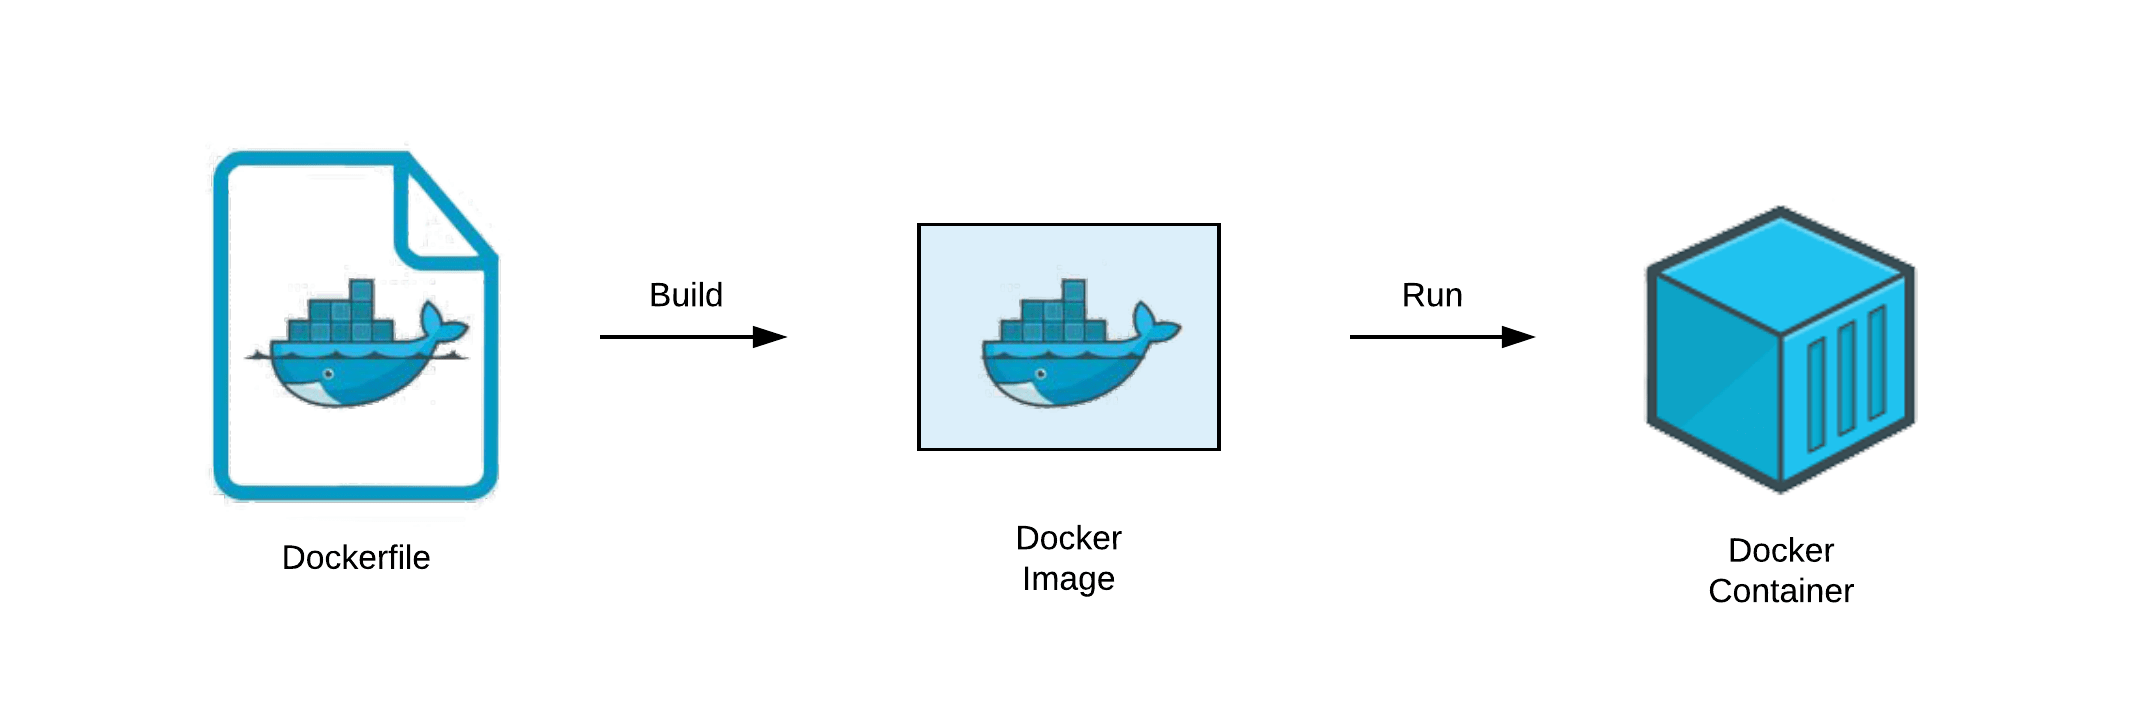 Dockerfile to Docker Image